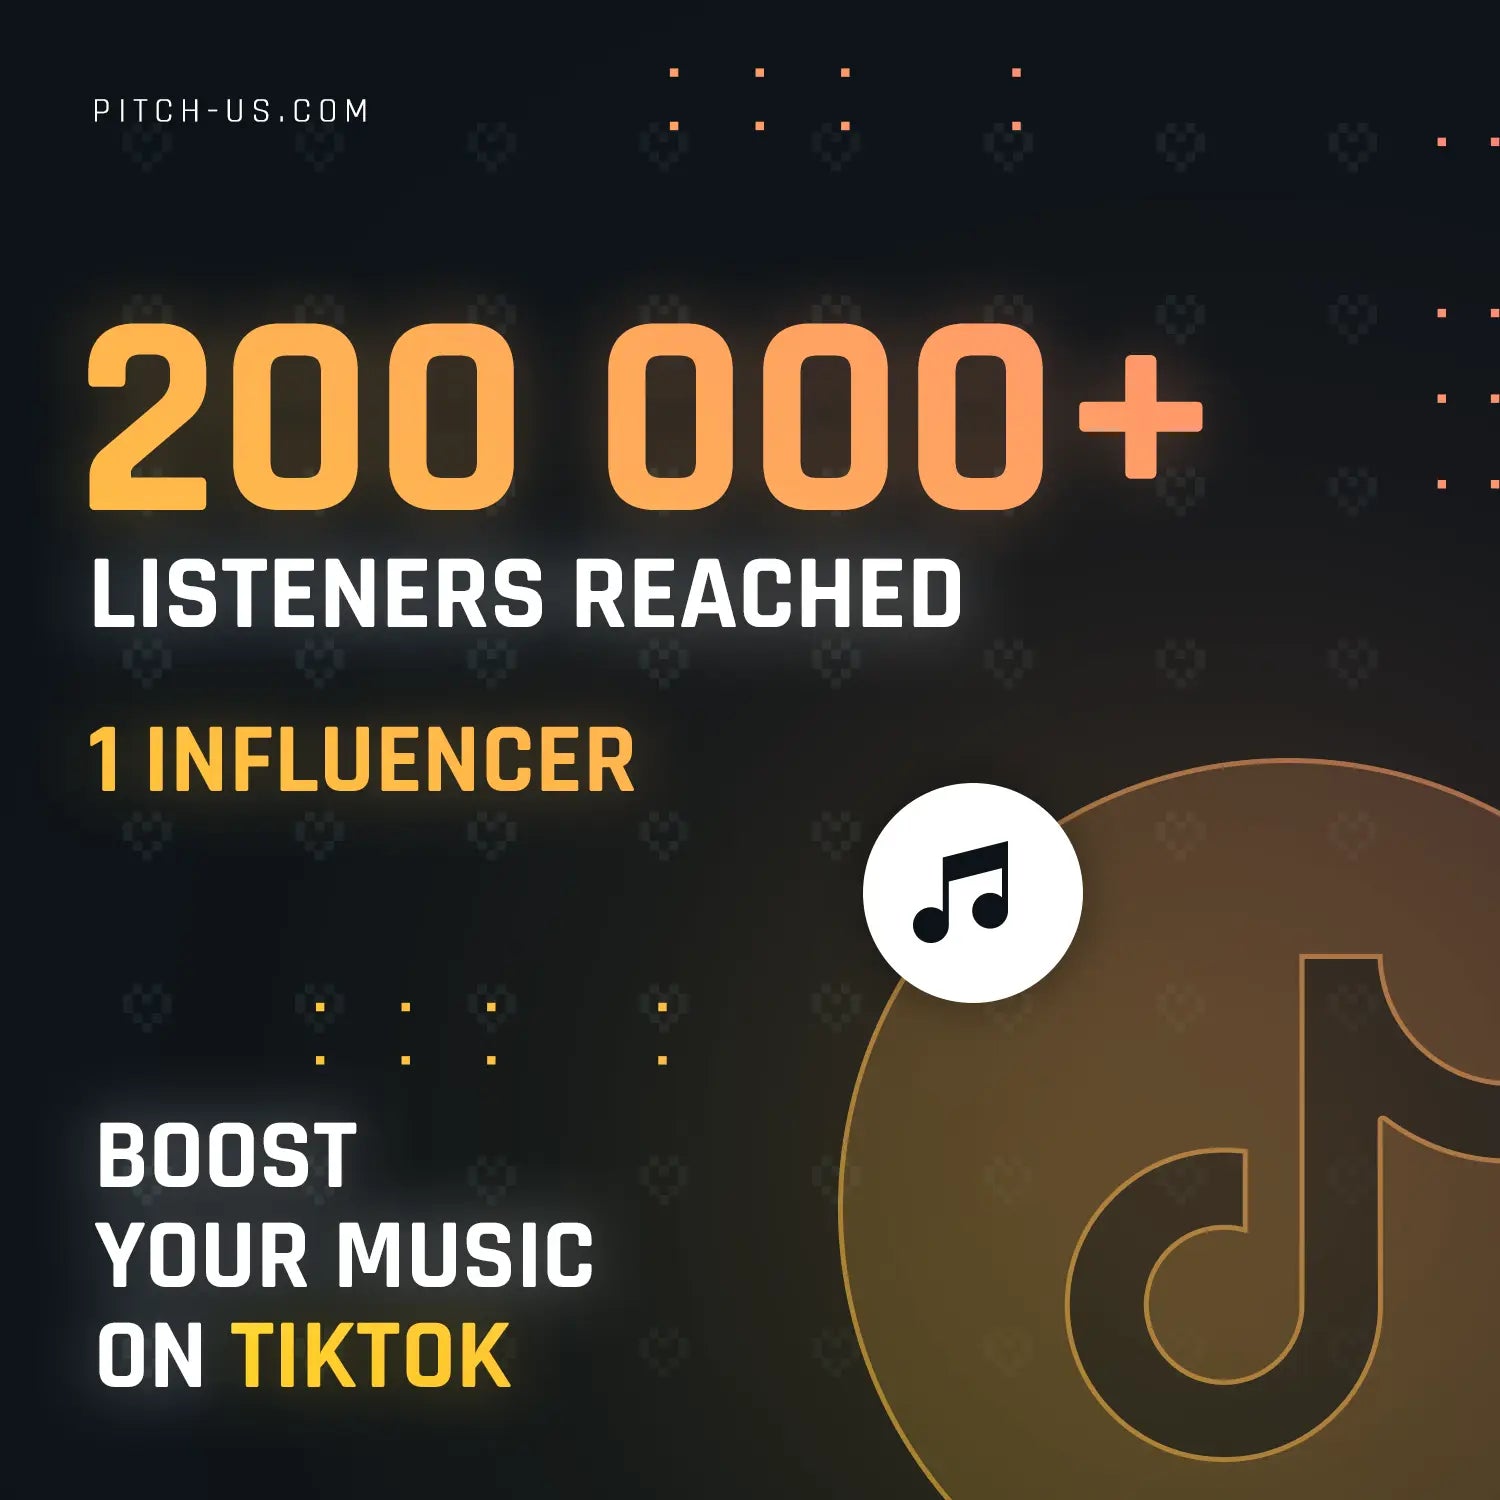 TikTok Promote (200,000+ Listeners) Pitch-Us